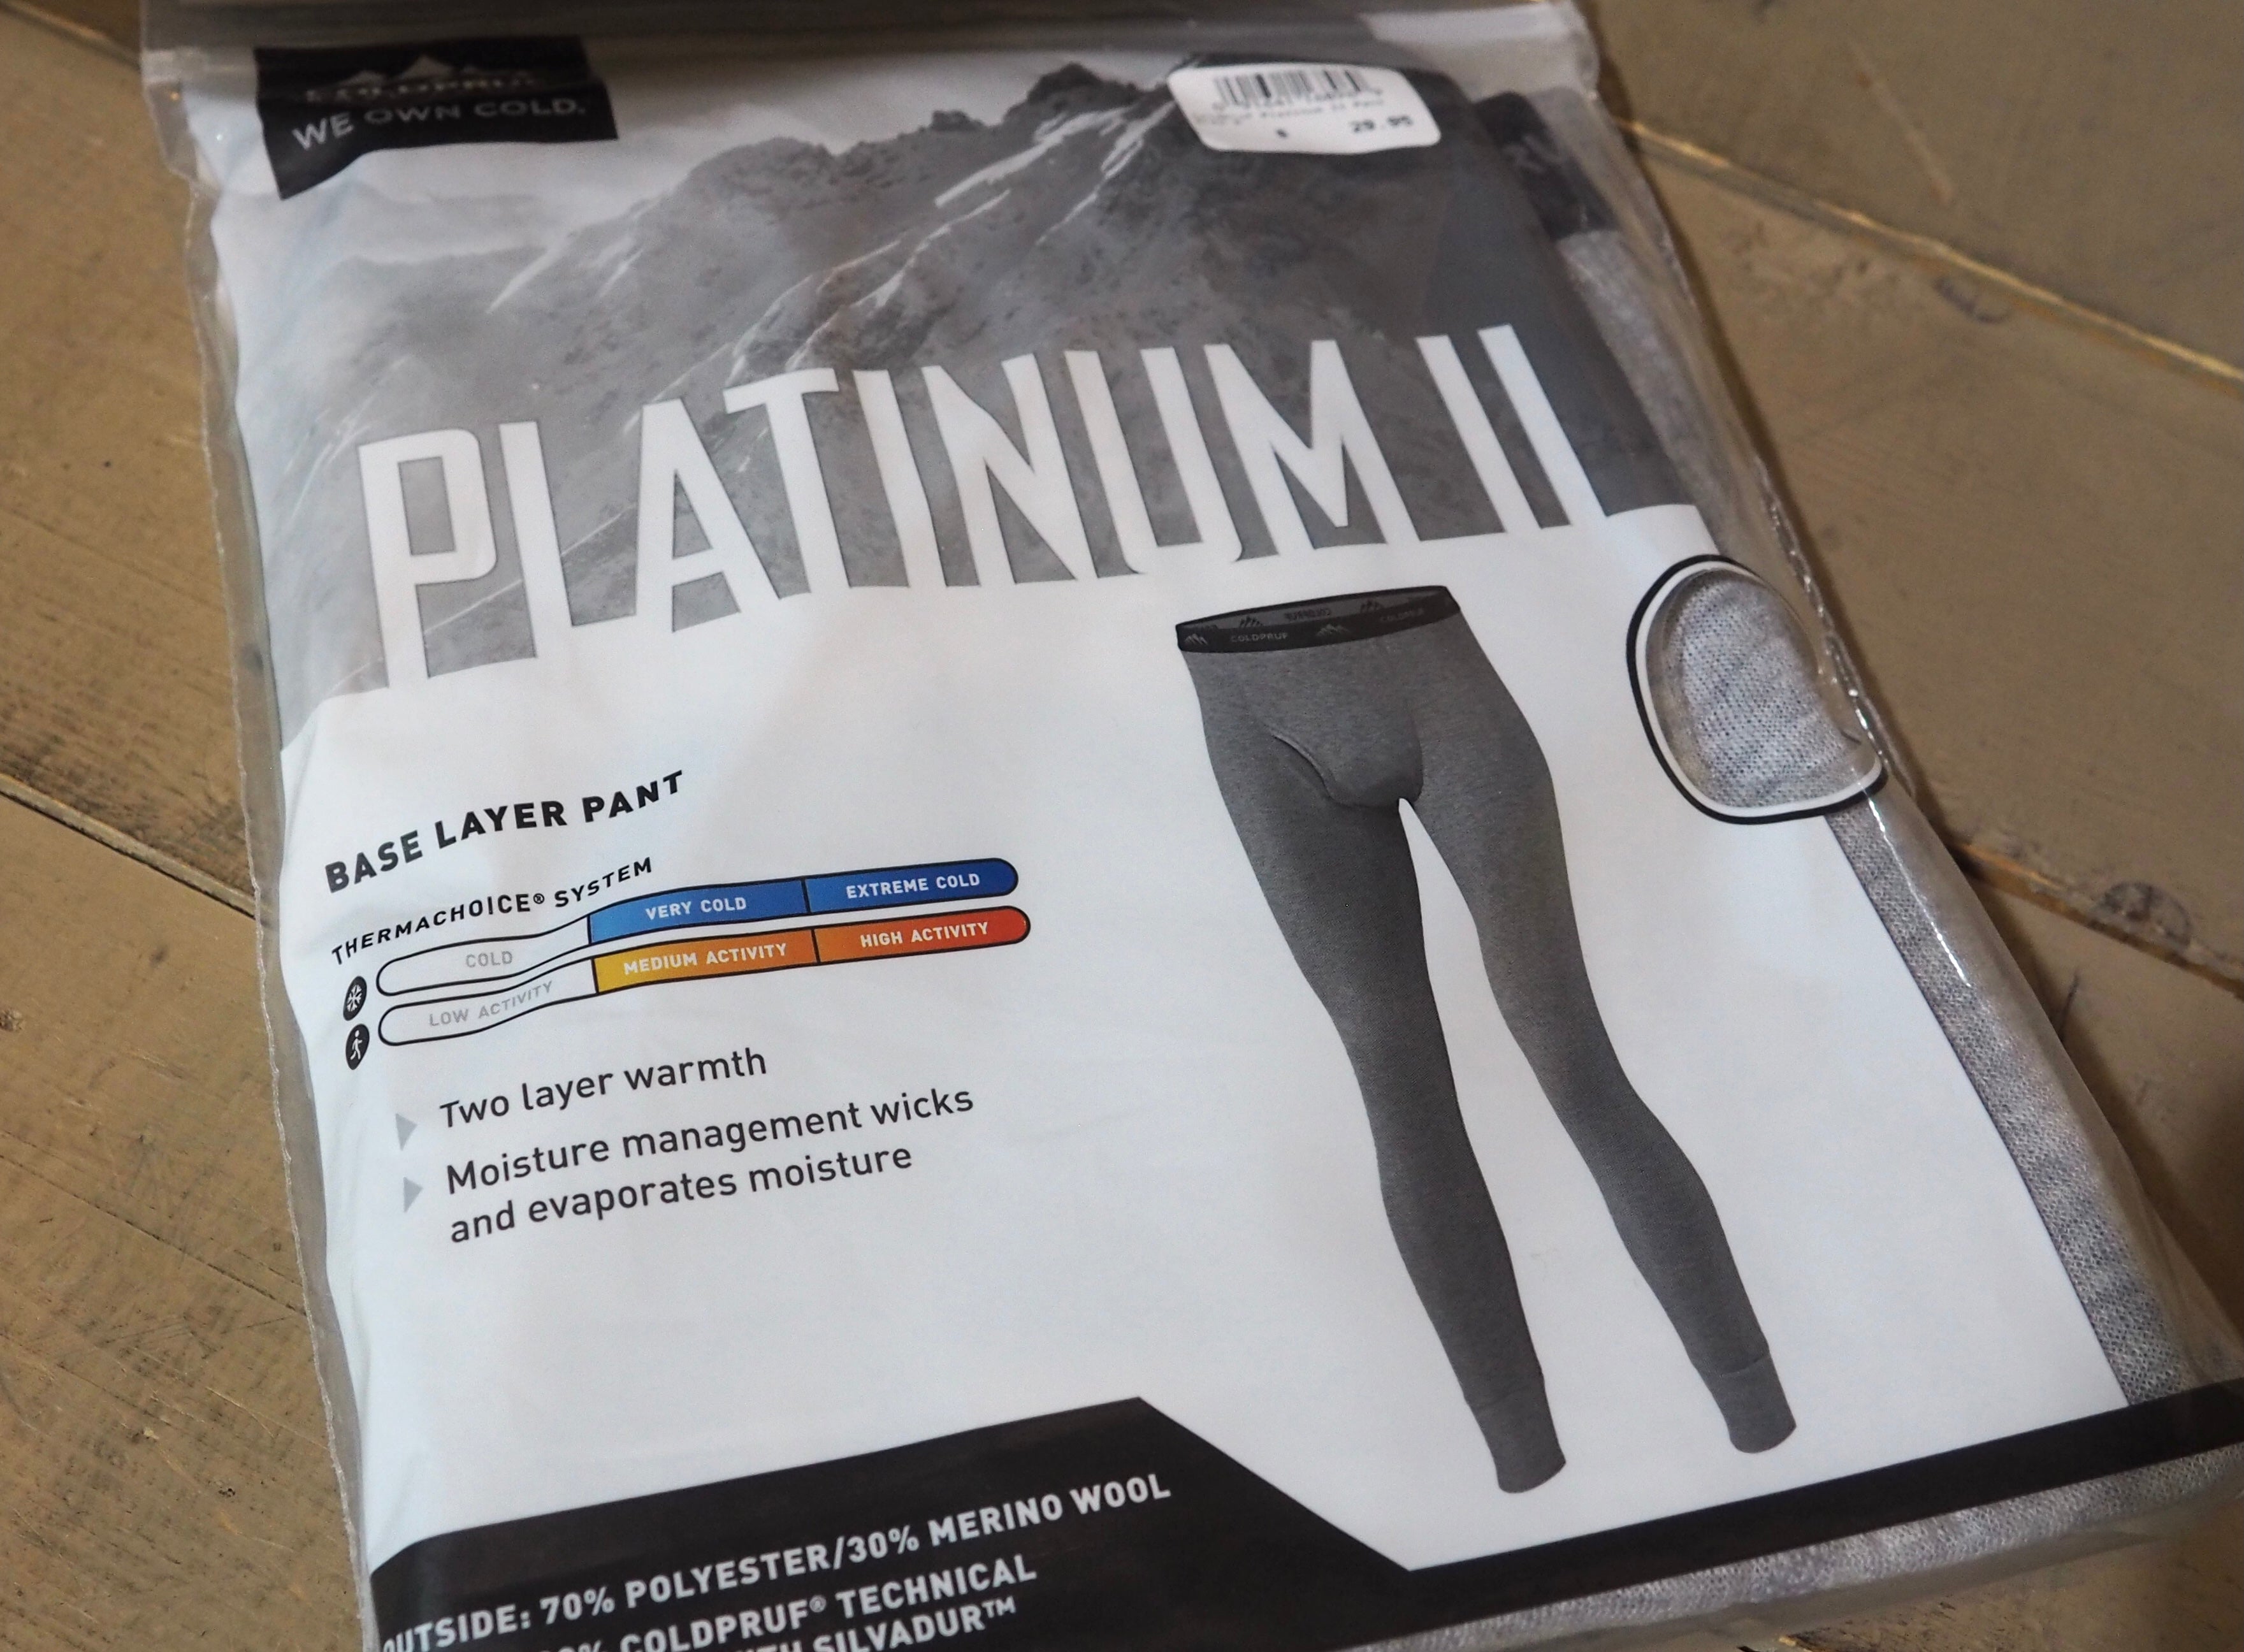 Coldpruf Men's Platinum II Base Layer Pant GREY